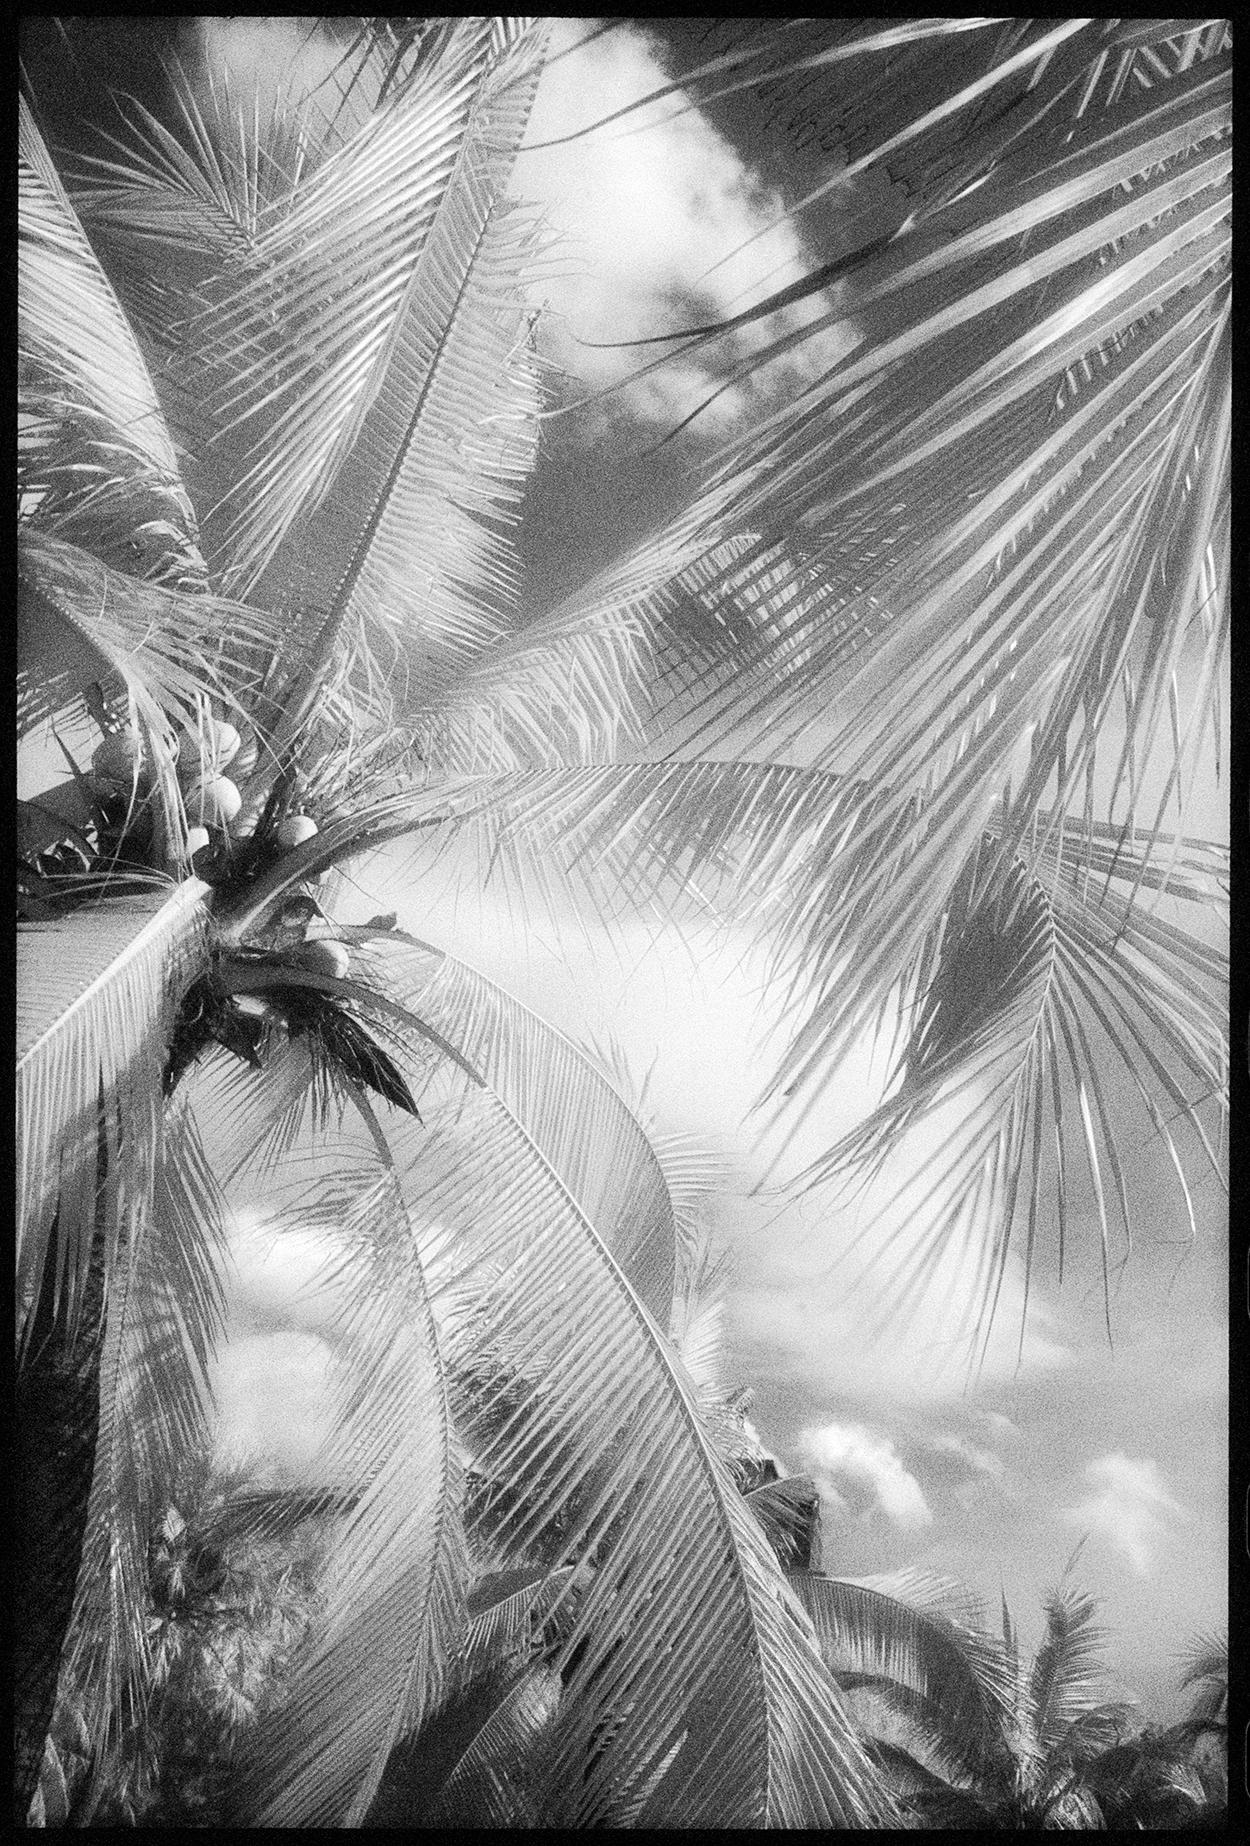 Edward Alfano Black and White Photograph - Lumphini Park - Infrared Photograph on Double Sided Aluminum